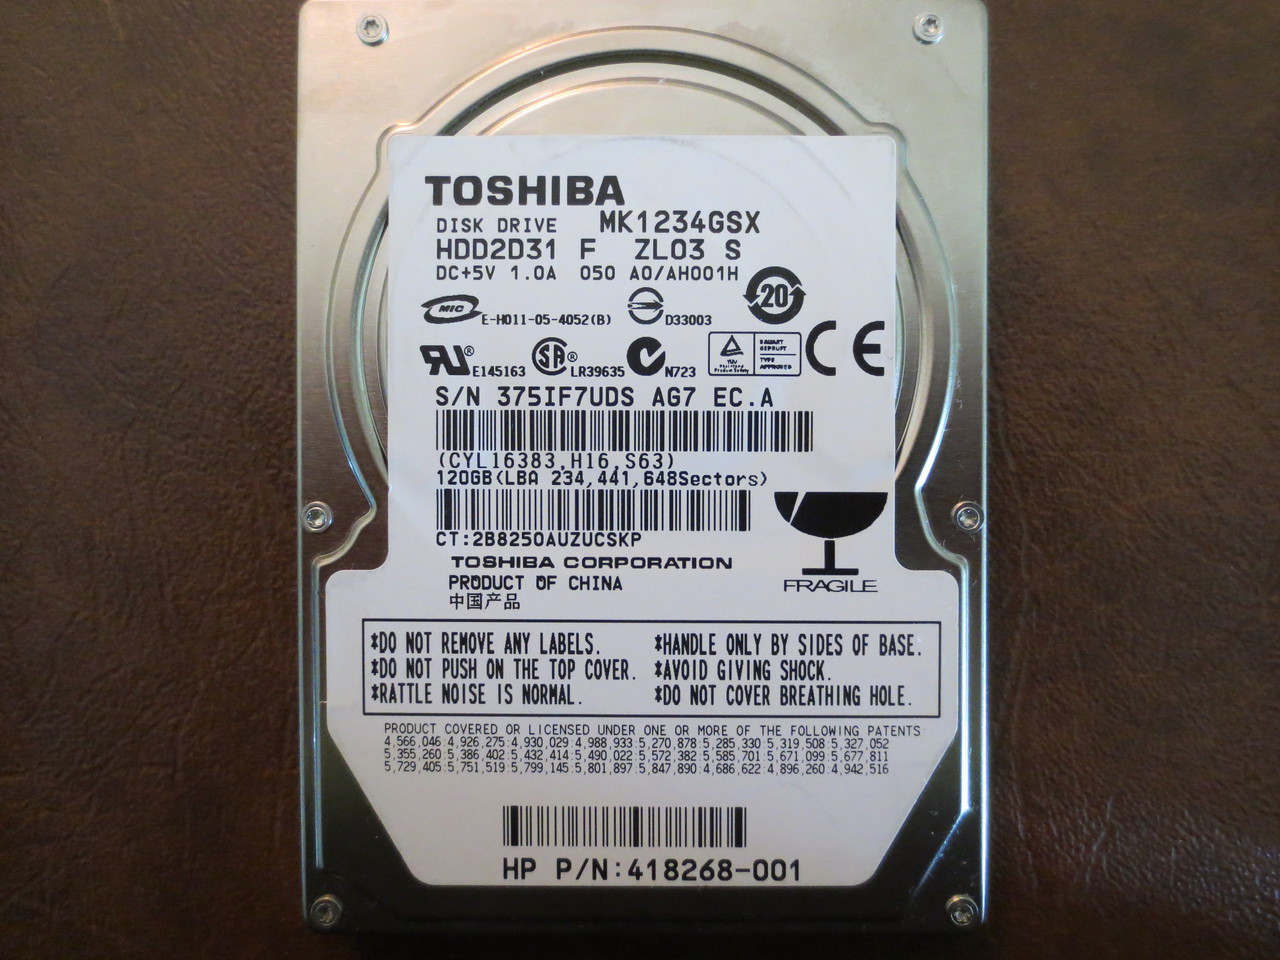 Toshiba MK1234GSX HDD2D31 F ZL03 S 050 A0/AH001H 120gb Sata - Effective  Electronics